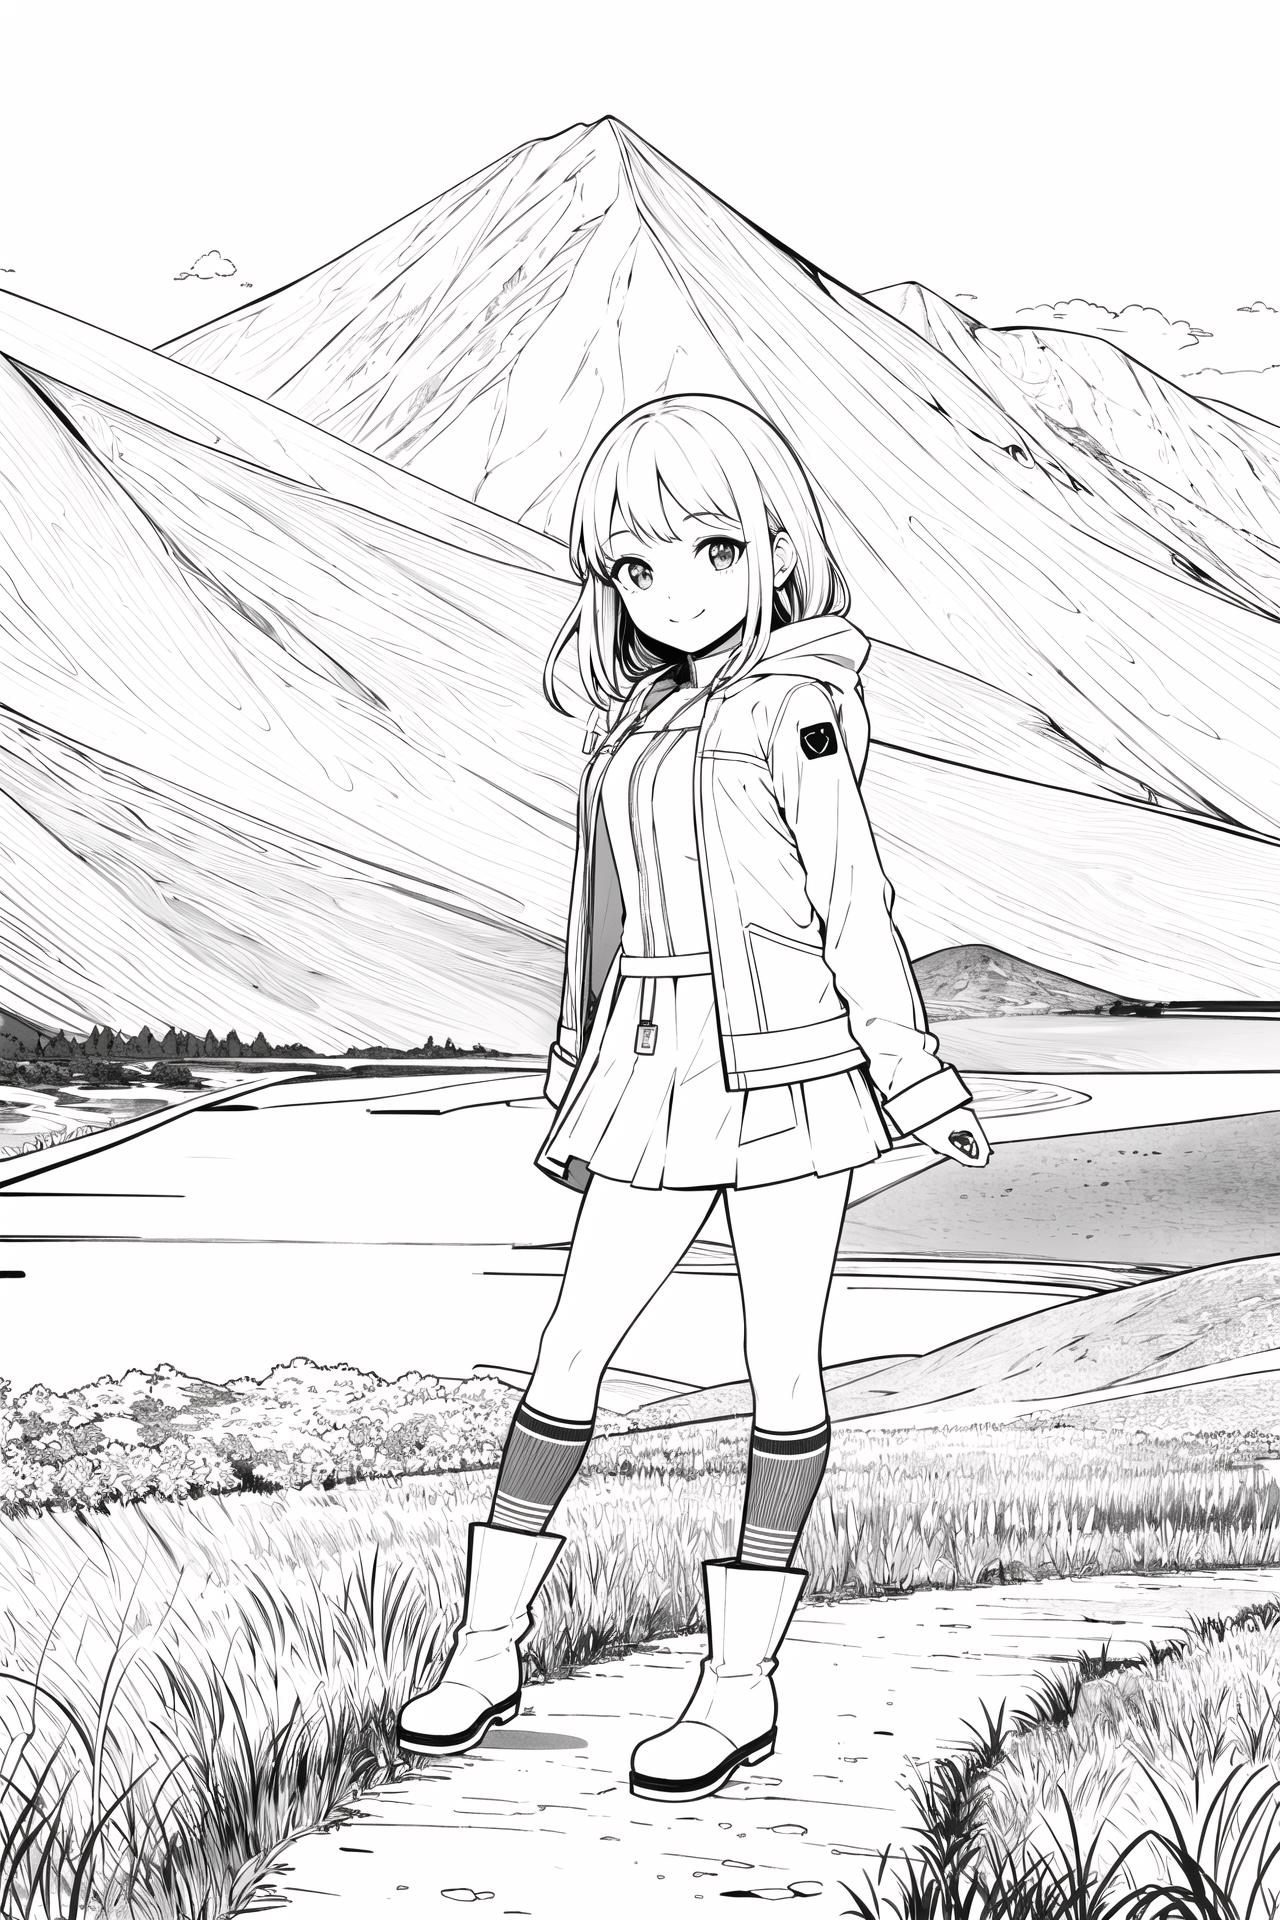 Anime Lineart / Manga-like (线稿/線画/マンガ風/漫画风) Style image by CyberAIchemist